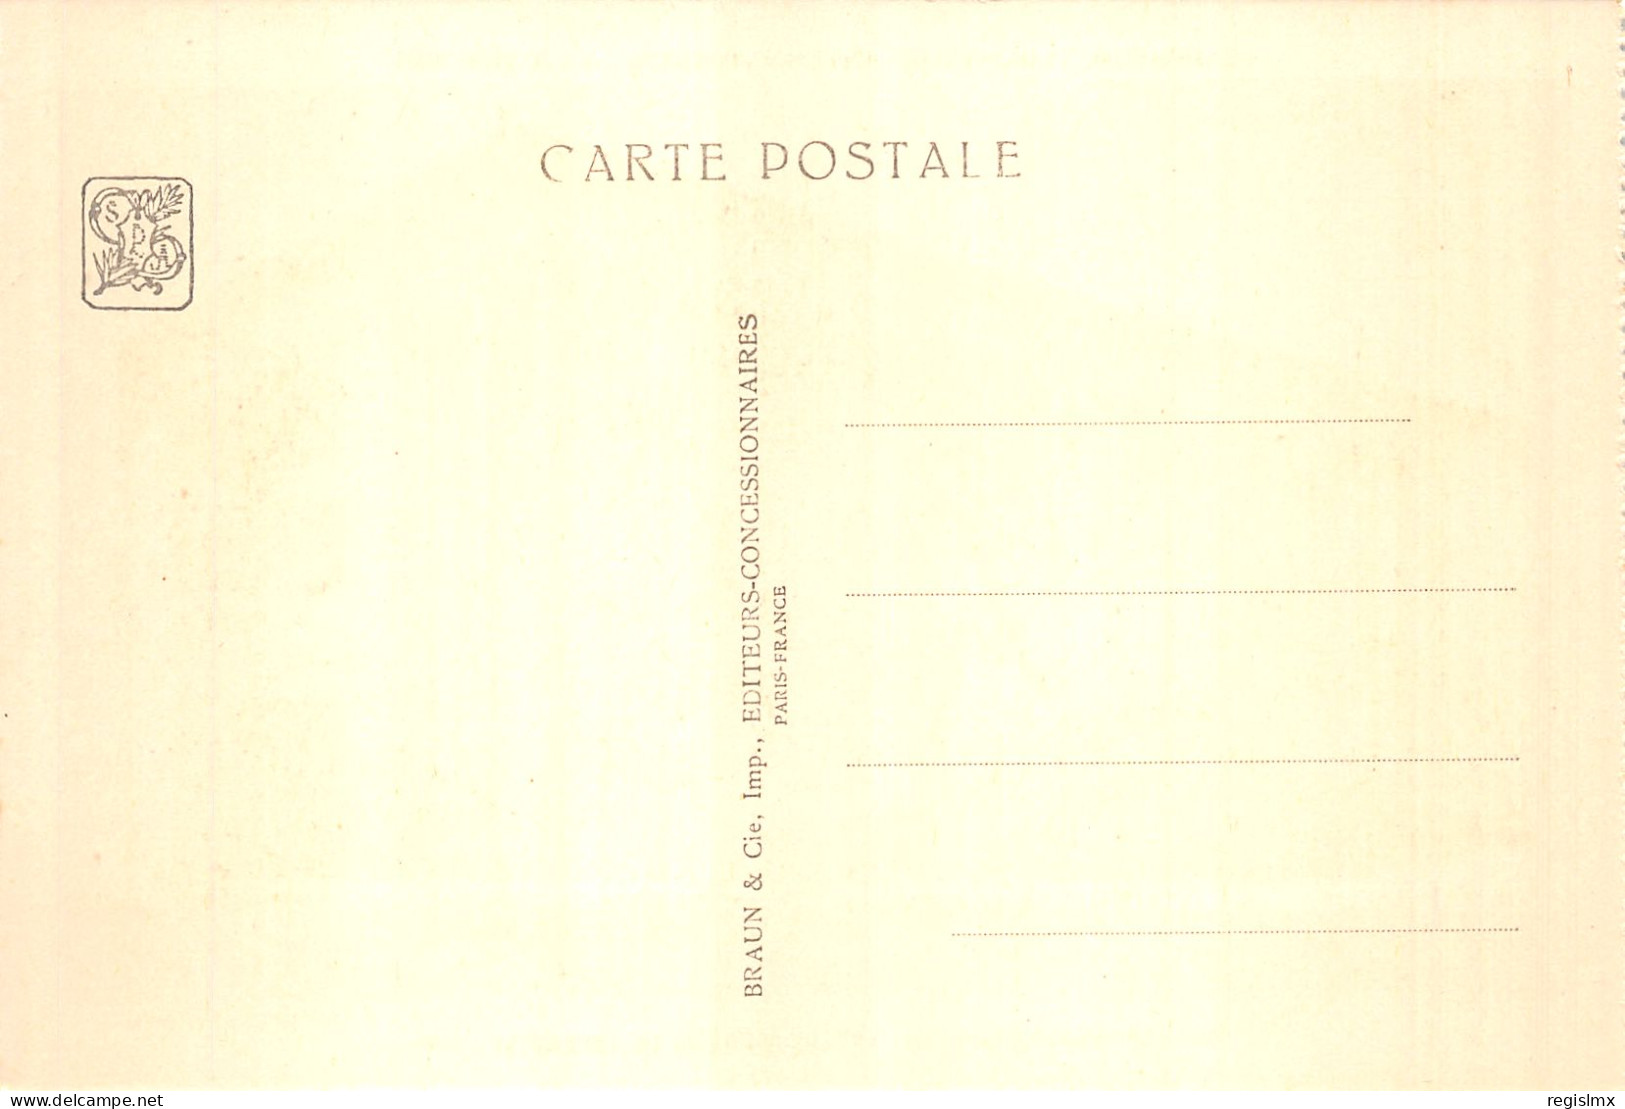 75-PARIS EXPOSTITION COLONIALE INTERNATIONALE 1931 CAMEROUN TOGO-N°T1054-H/0205 - Exposiciones